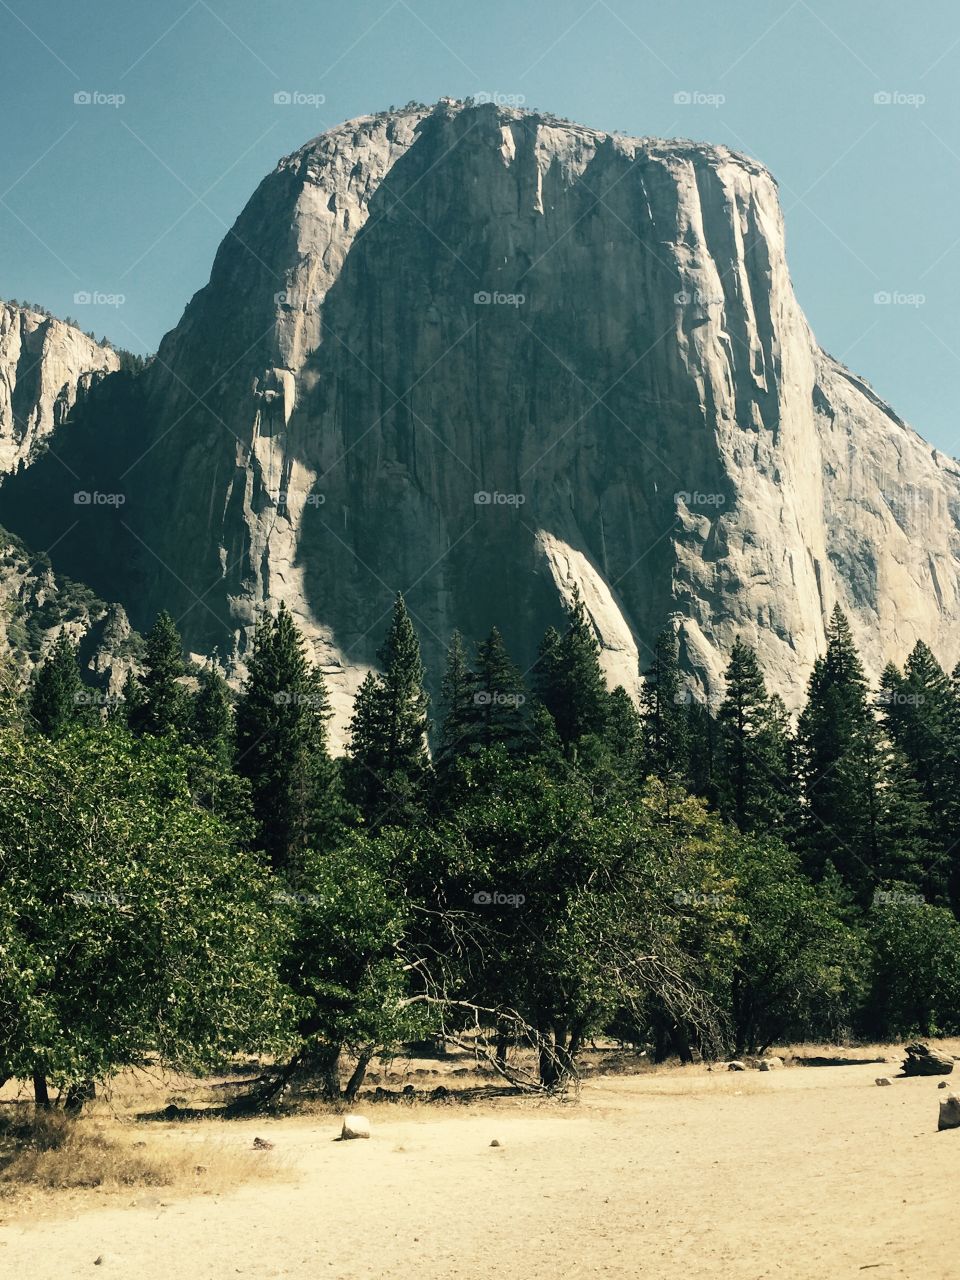 El Cap - Yosemite 